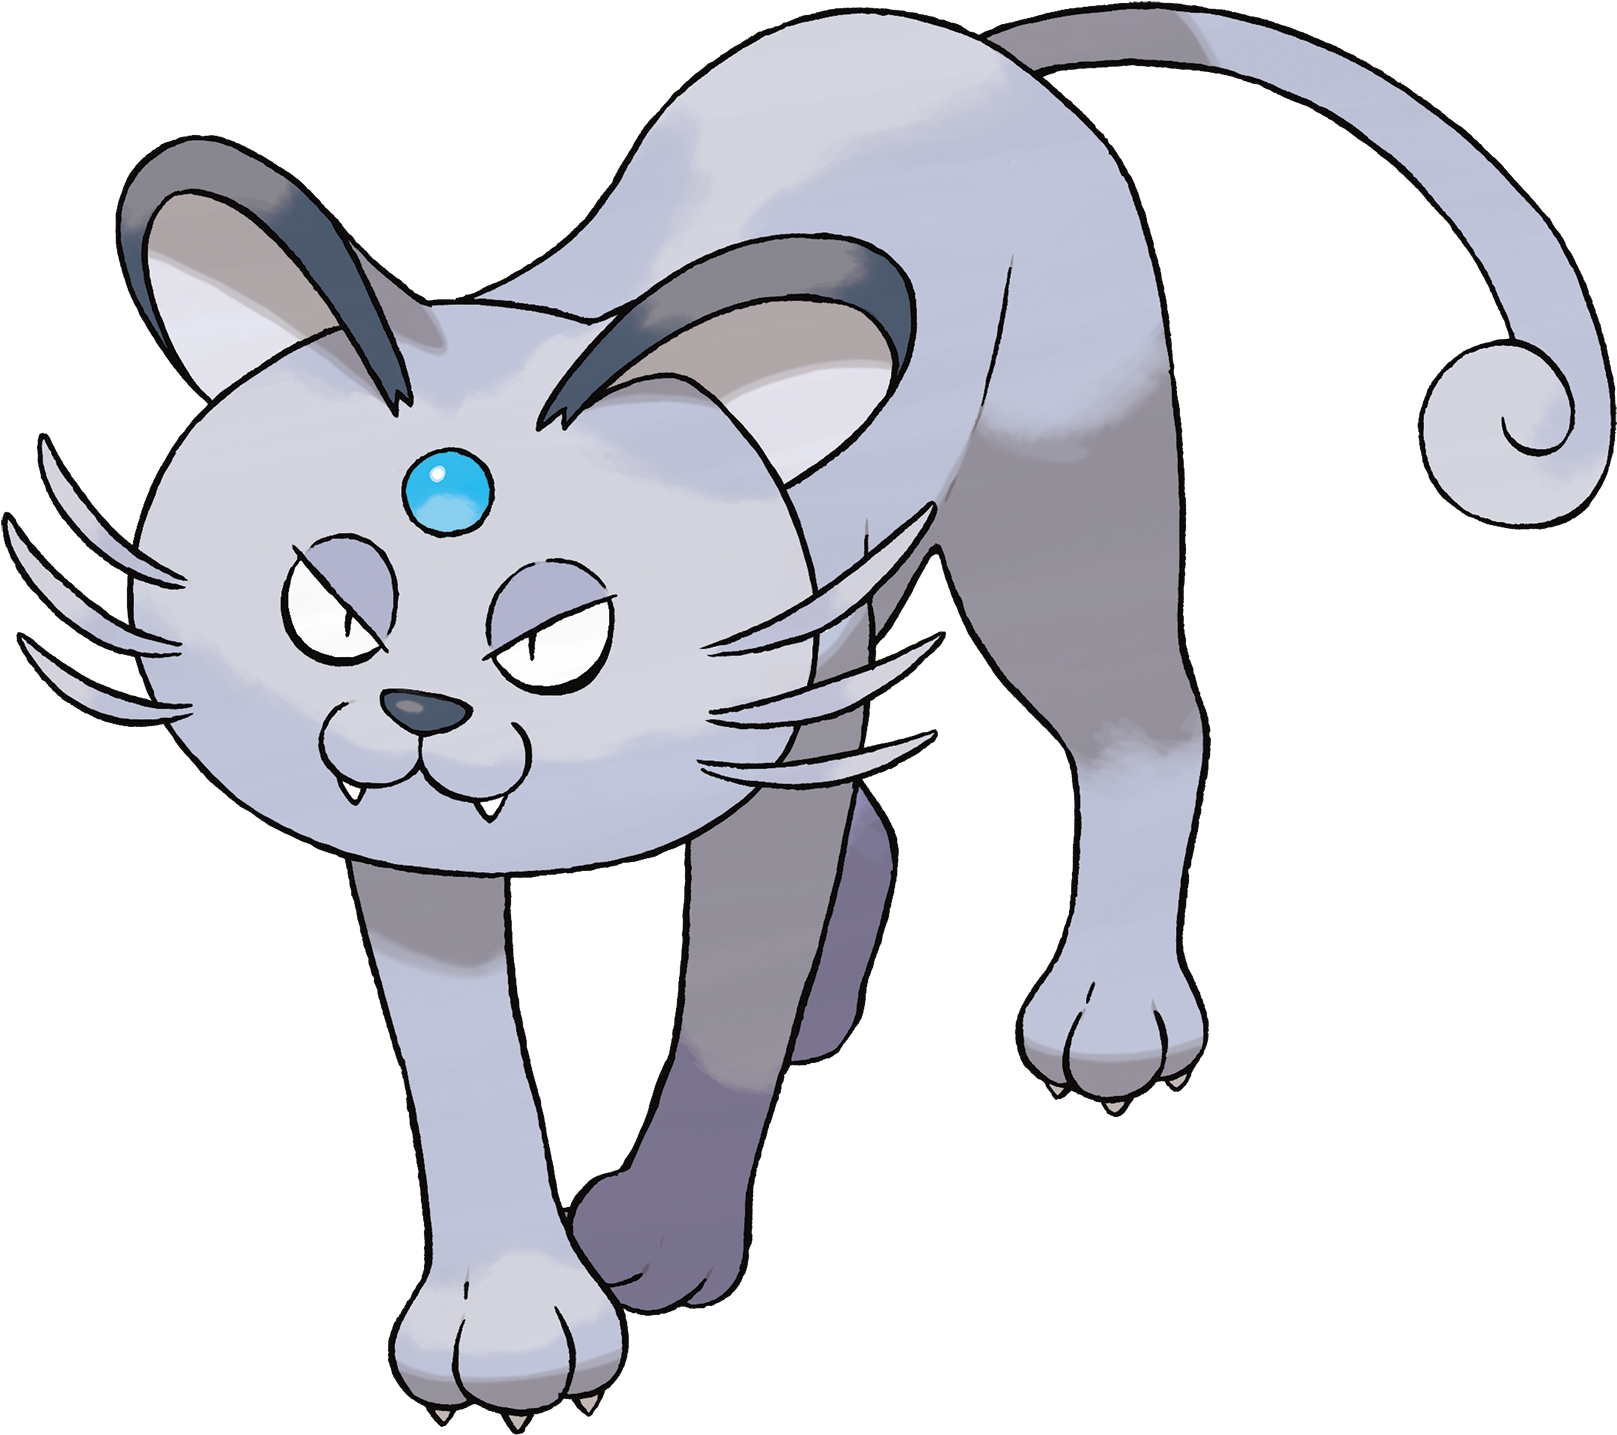 A Cartoon Cat With A Blue Gem